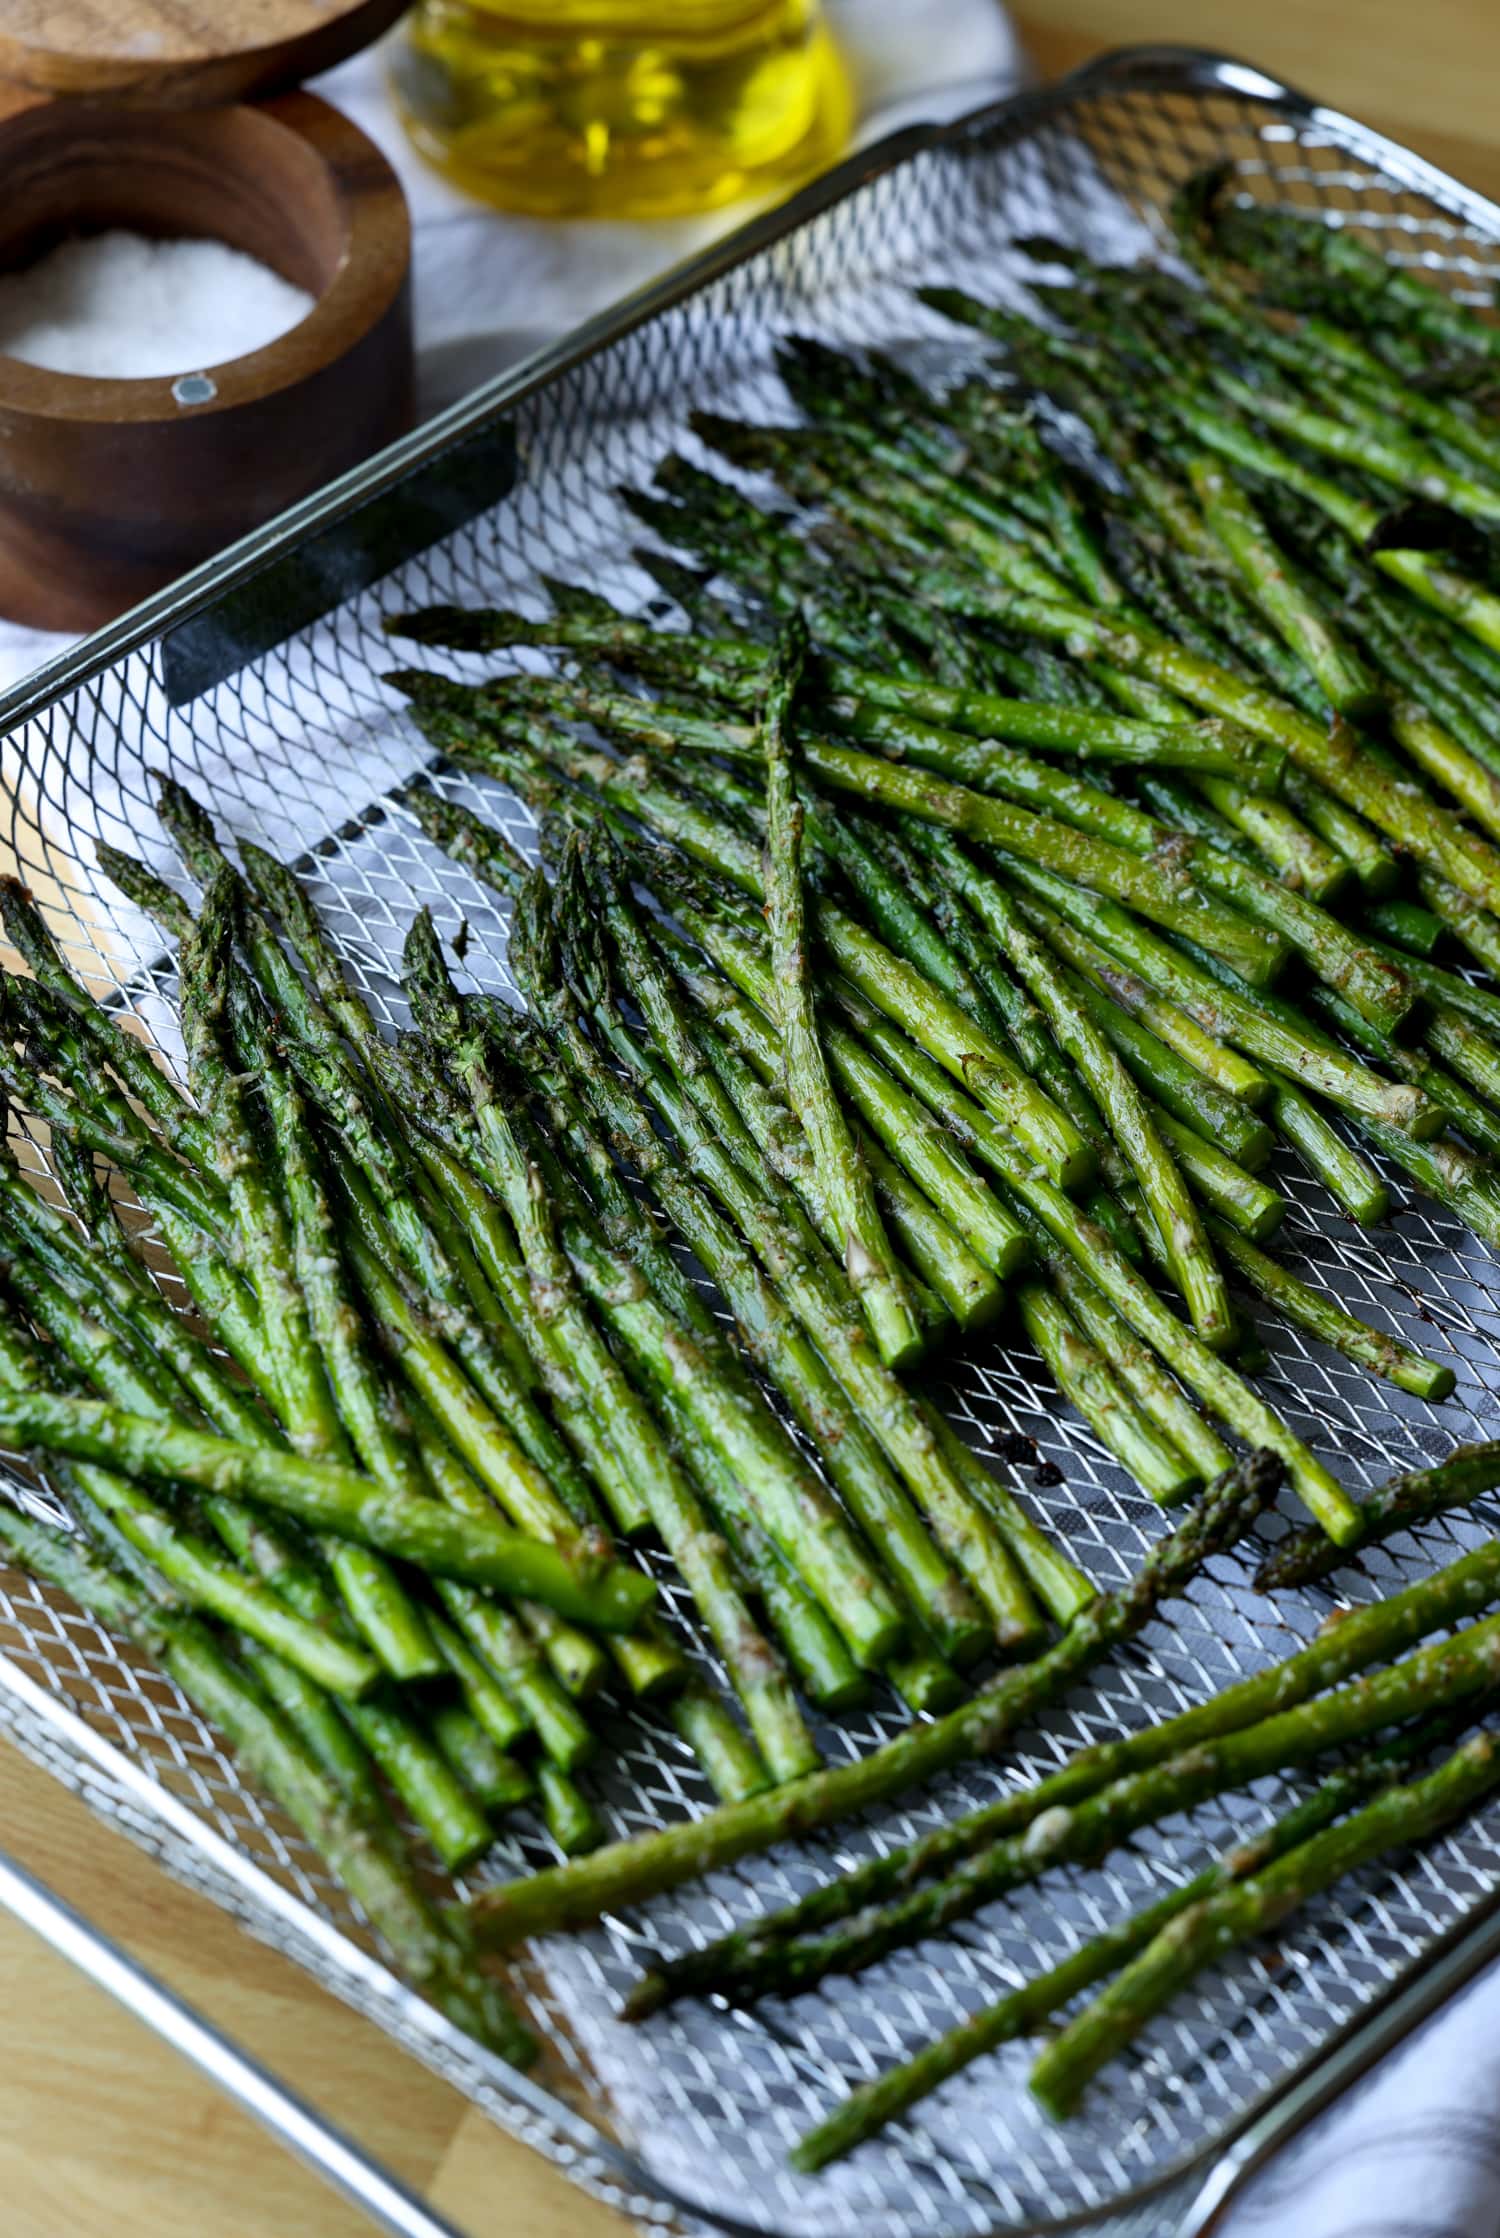 Tombak asparagus goreng udara tersebar di rak kawat.